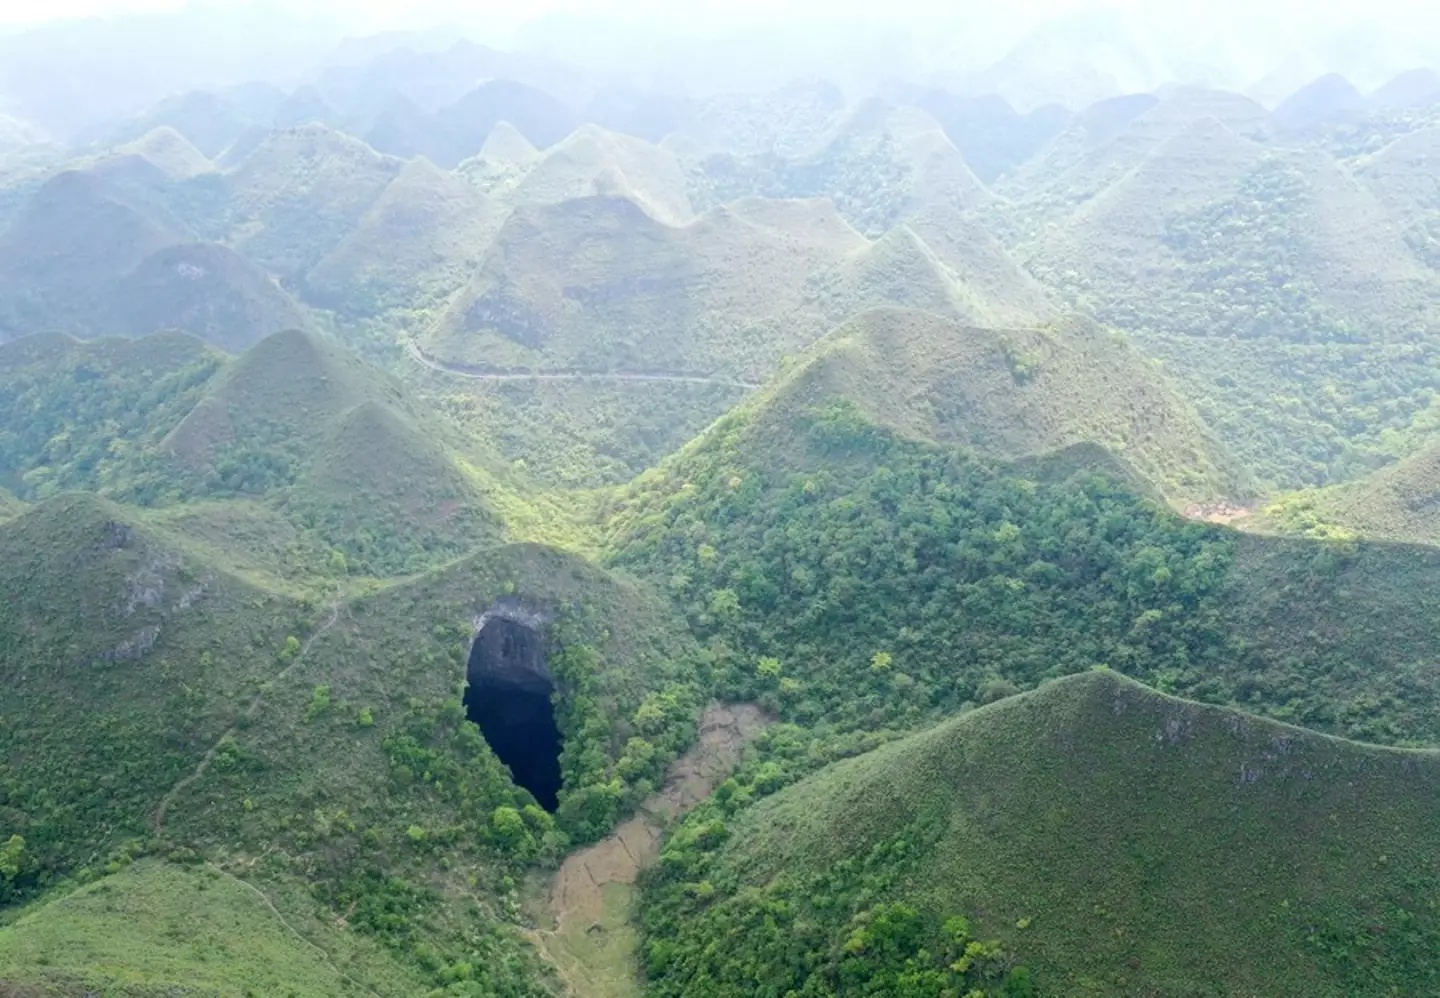 A giant karst sinkhole at Leye-Fengshan Global Geopark.